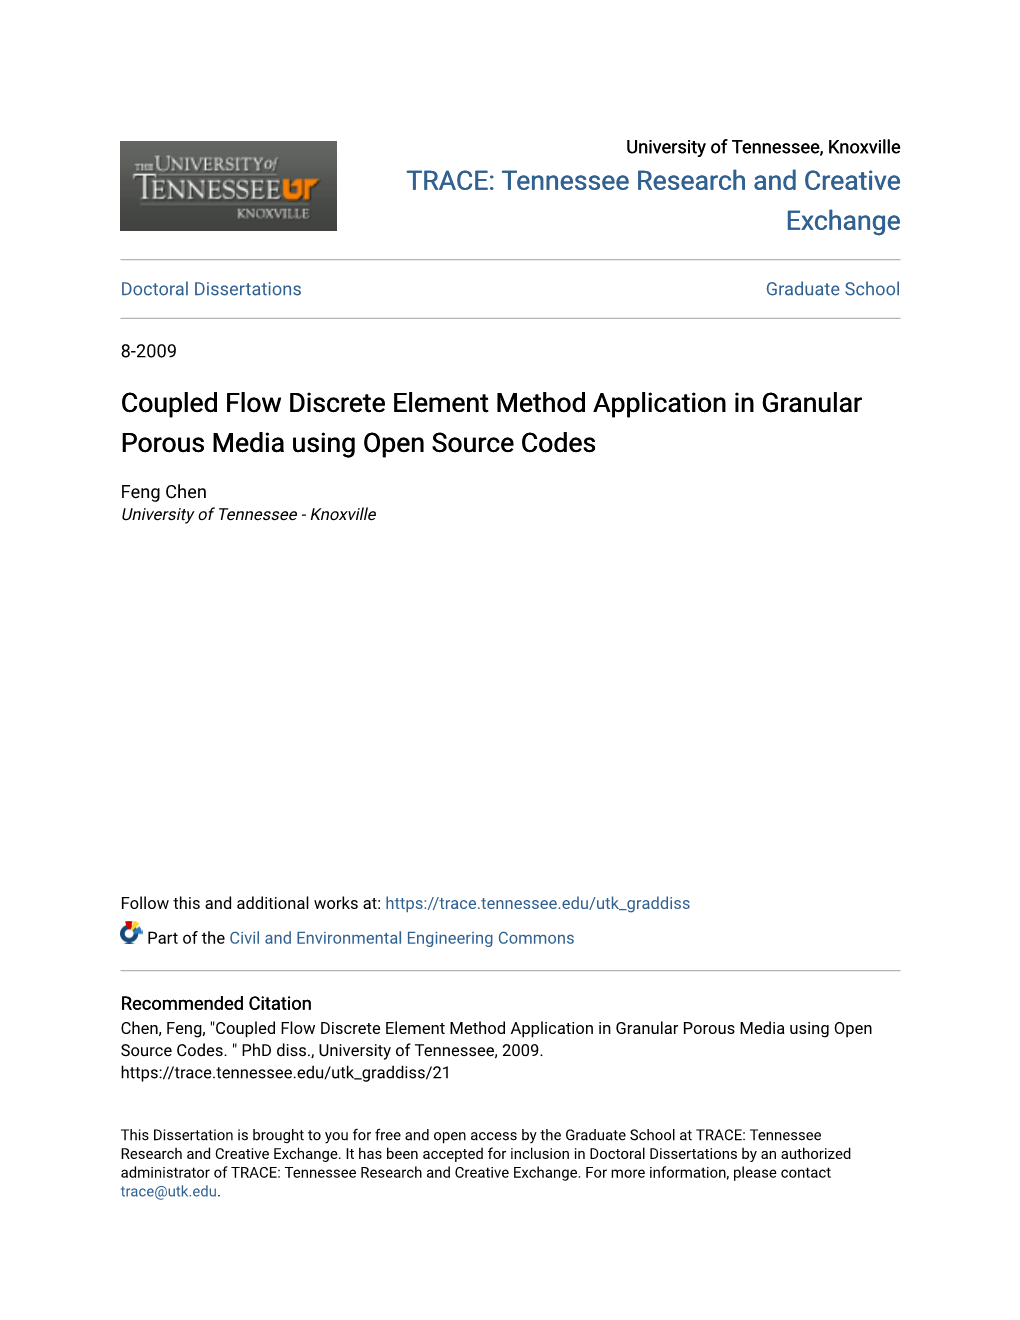 Coupled Flow Discrete Element Method Application in Granular Porous Media Using Open Source Codes